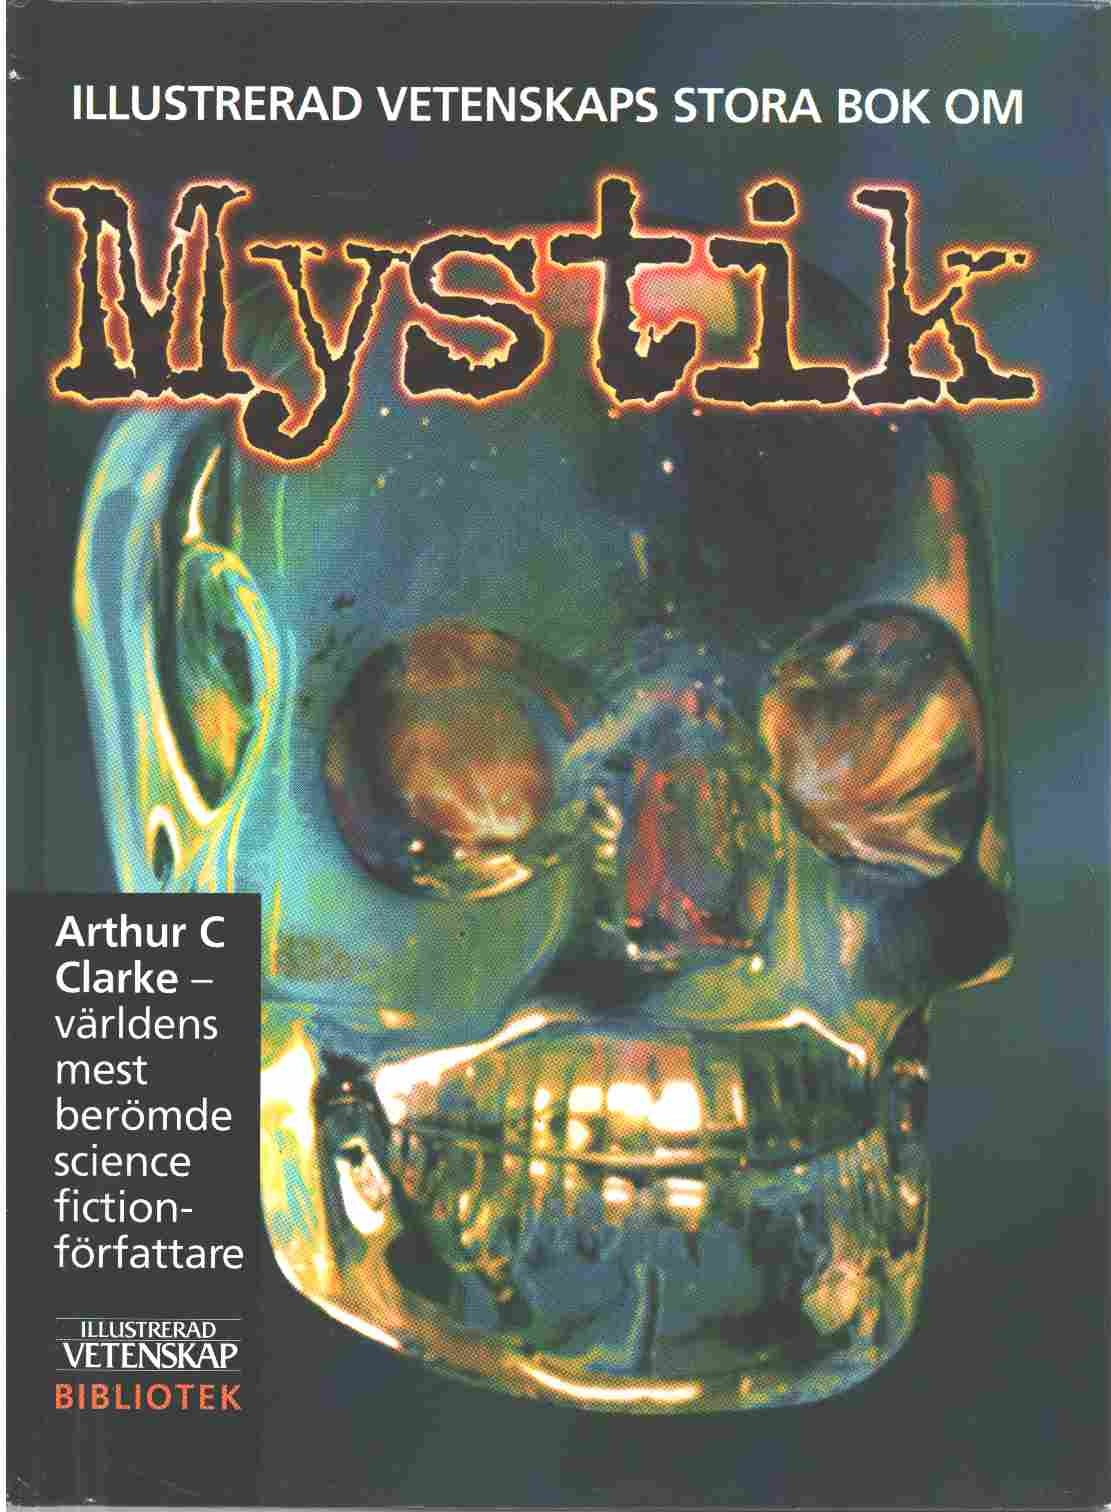 Clarke, Arthur C "Illustrerad Vetenskaps stora bok om MYSTIK"